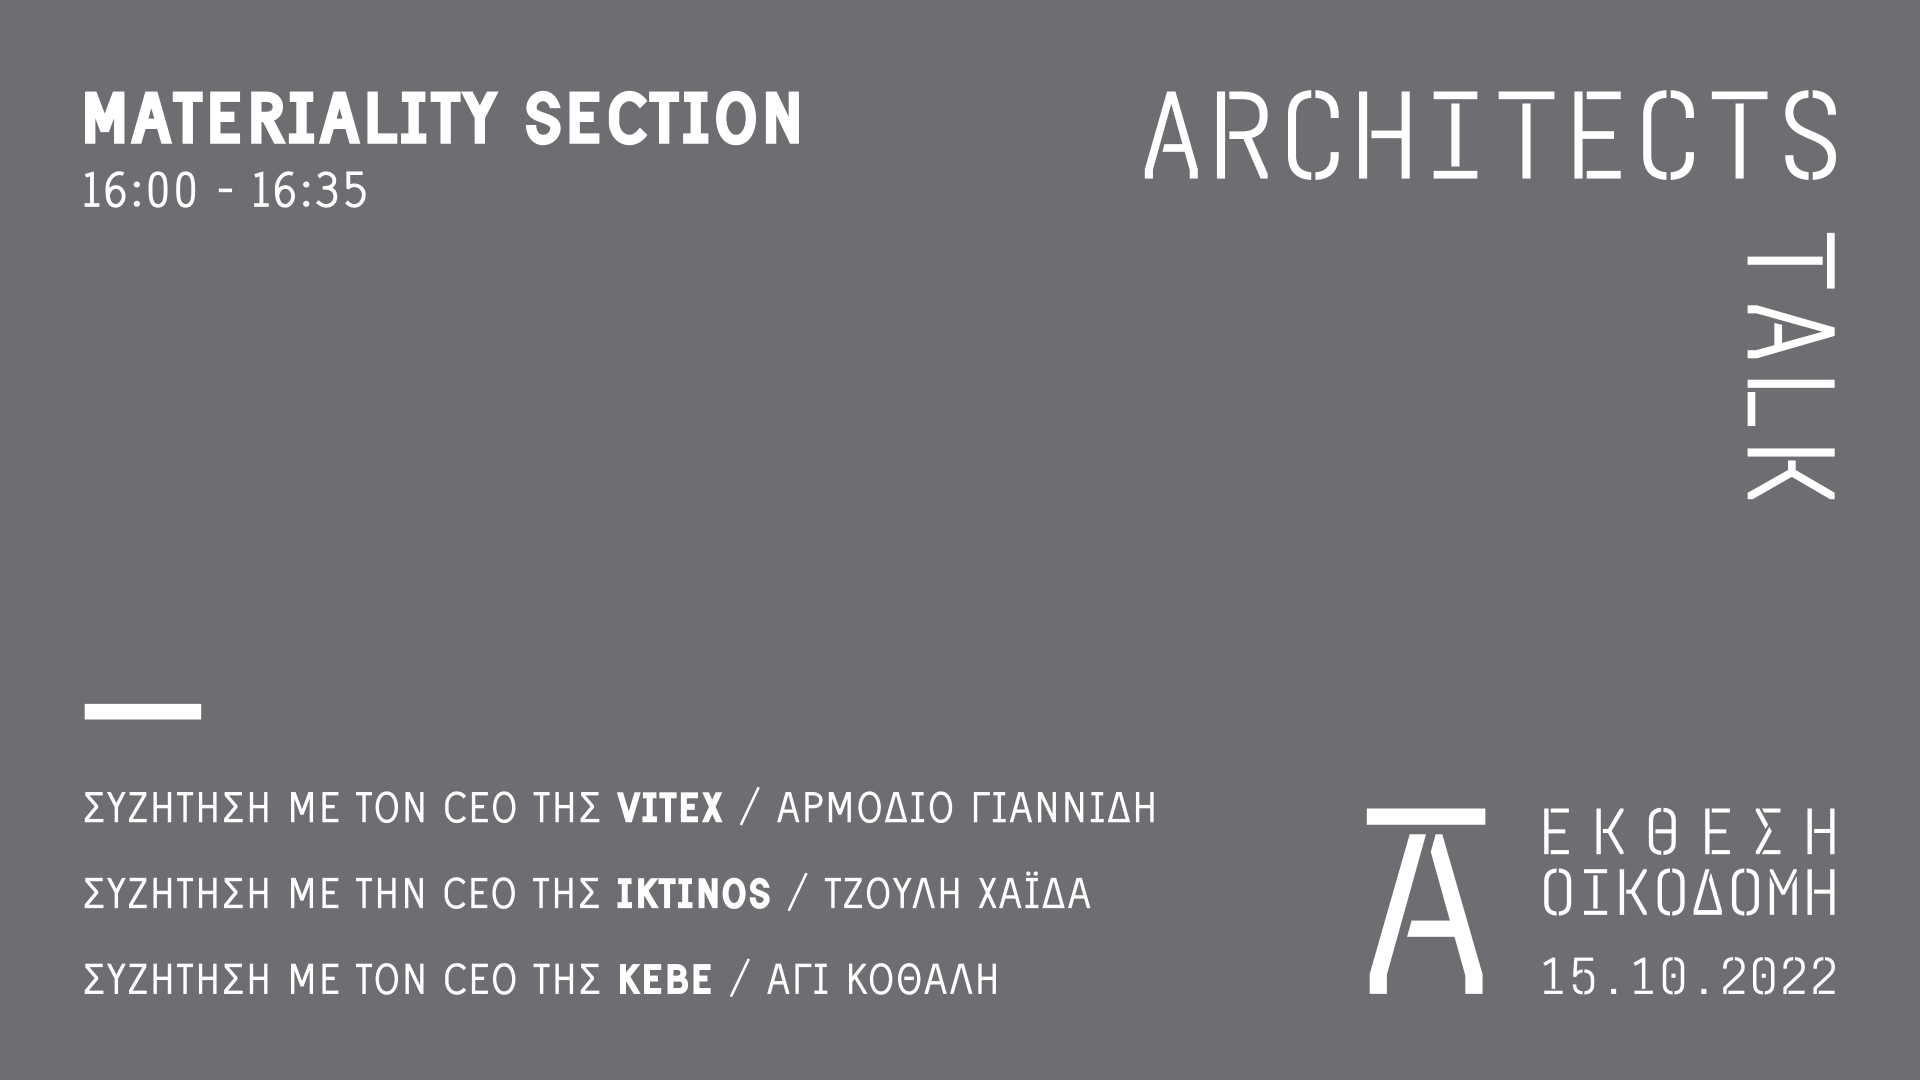 Archisearch Architects Talk 2022 θα πραγματοποιηθεί στις 15 Οκτωβρίου στο Build expo Greece | Curated by the Design Ambassador